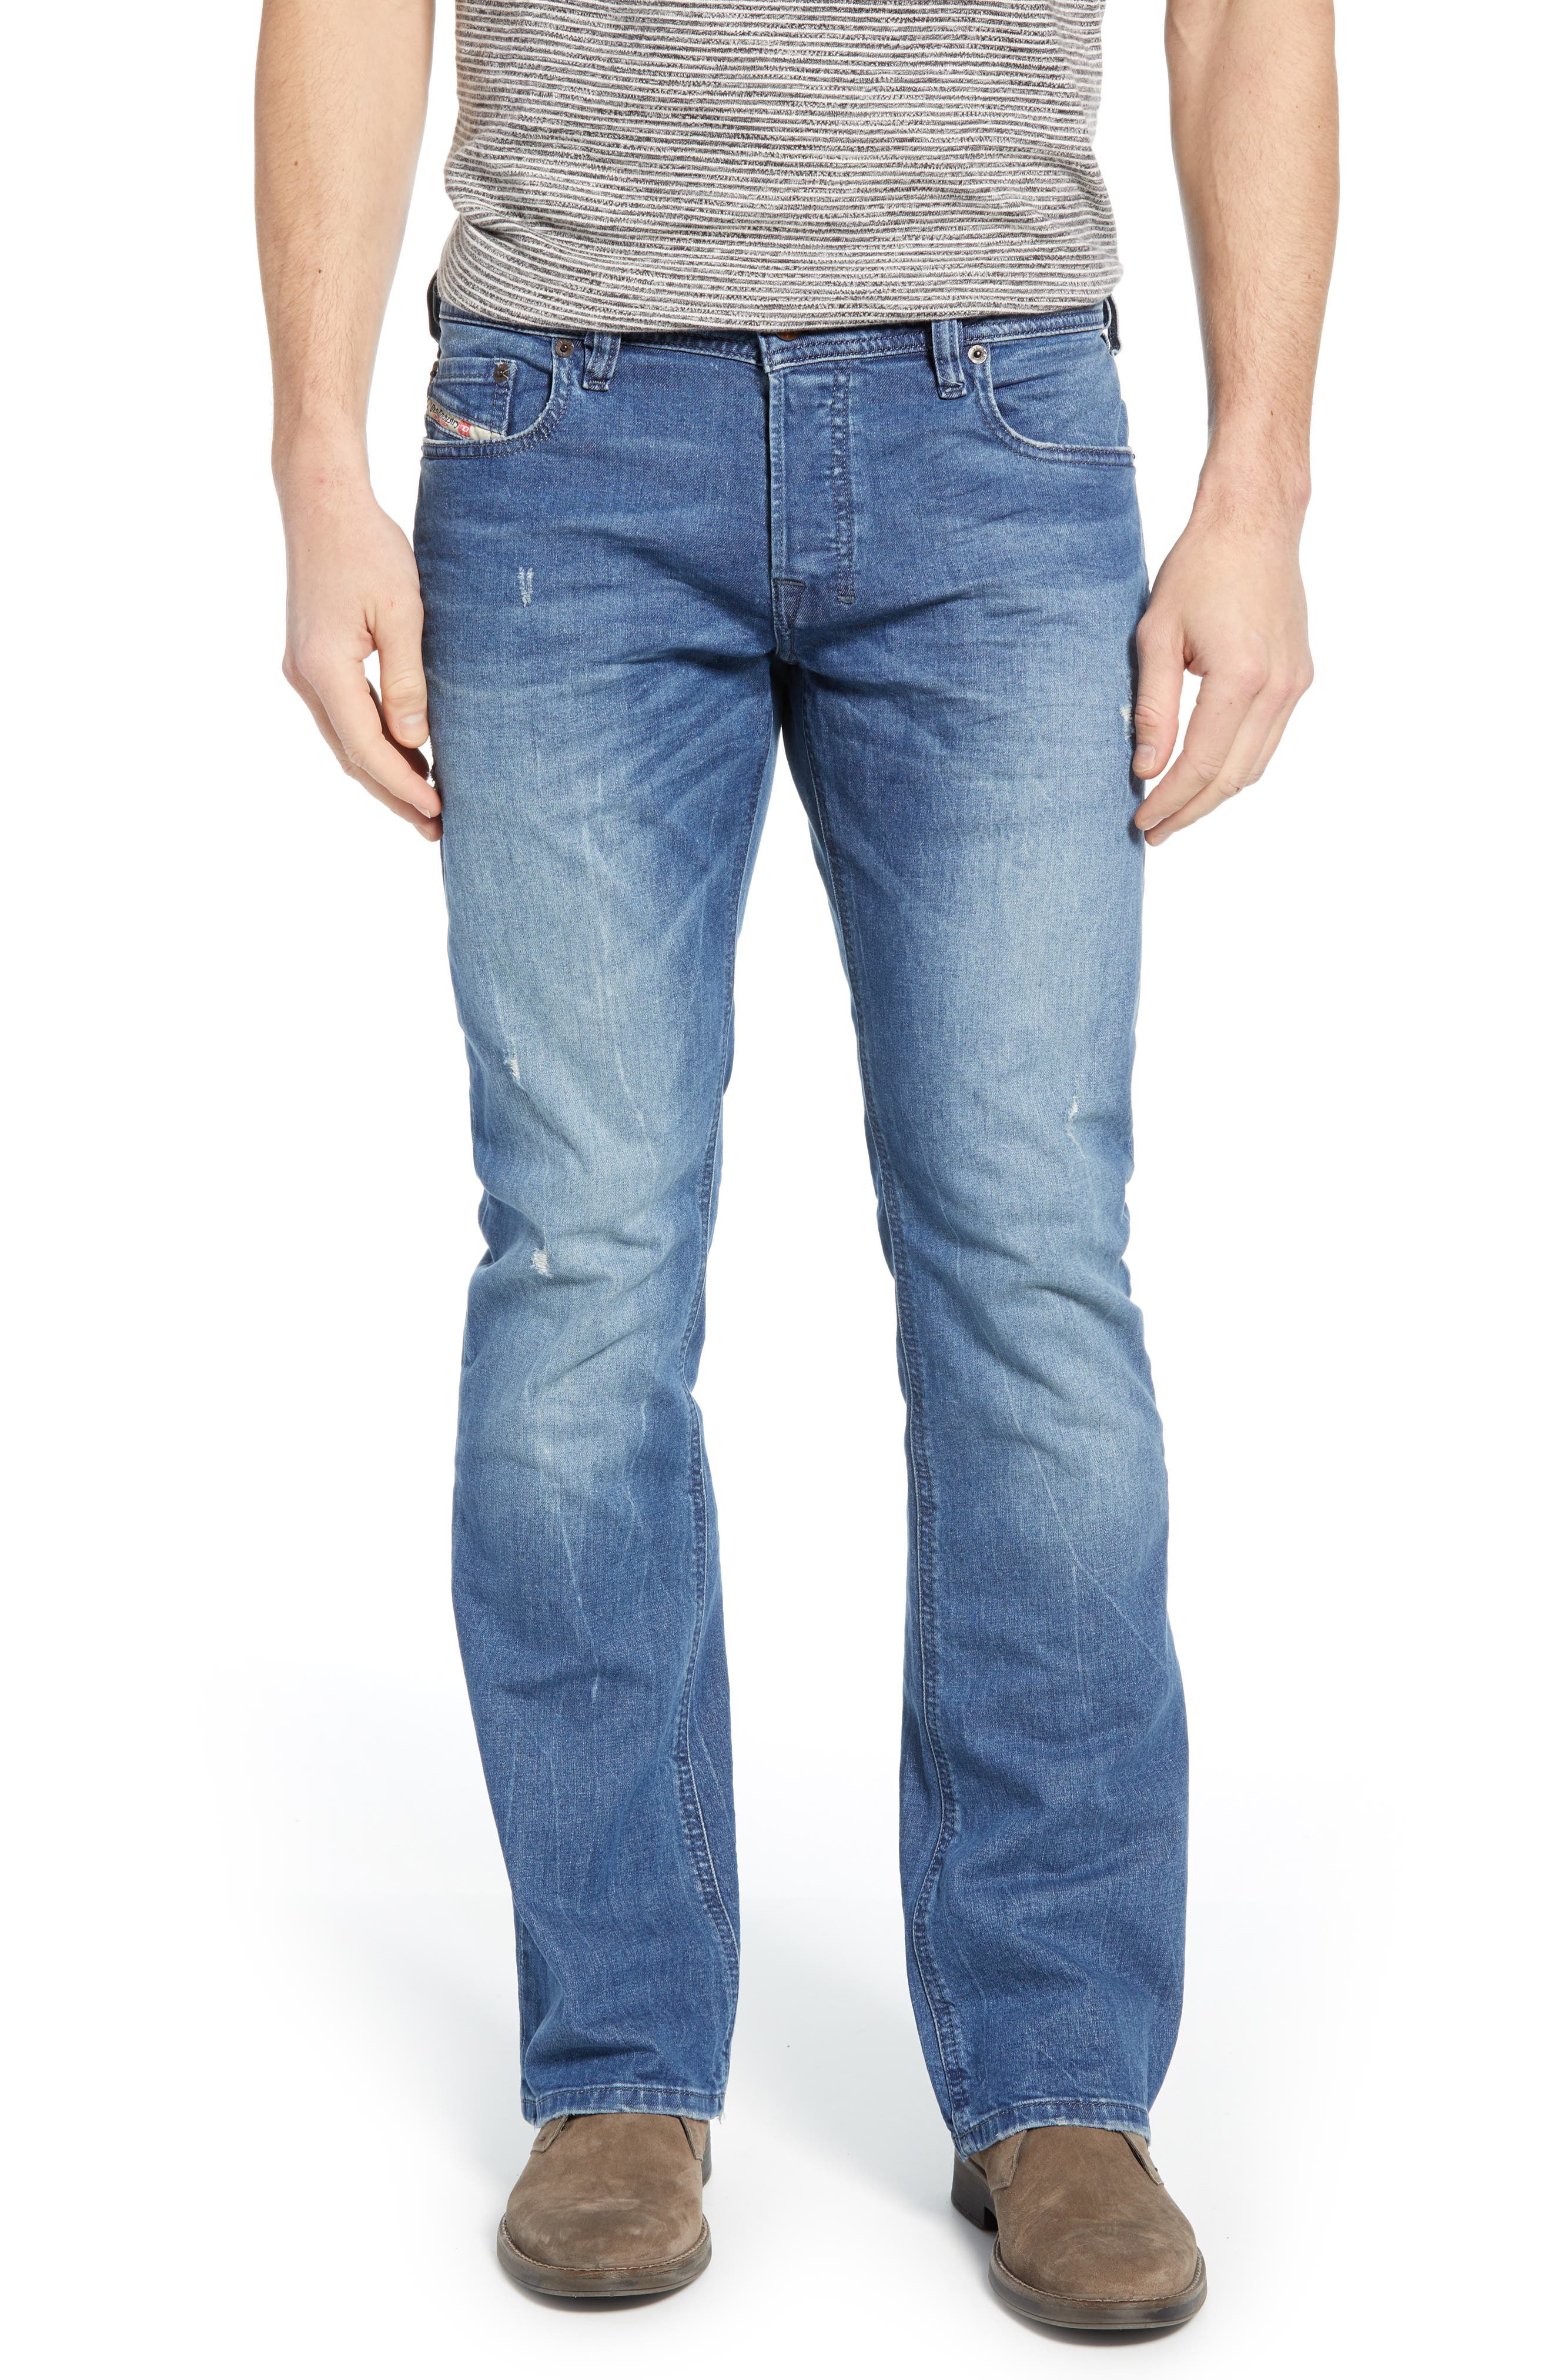 abercrombie jeans sale